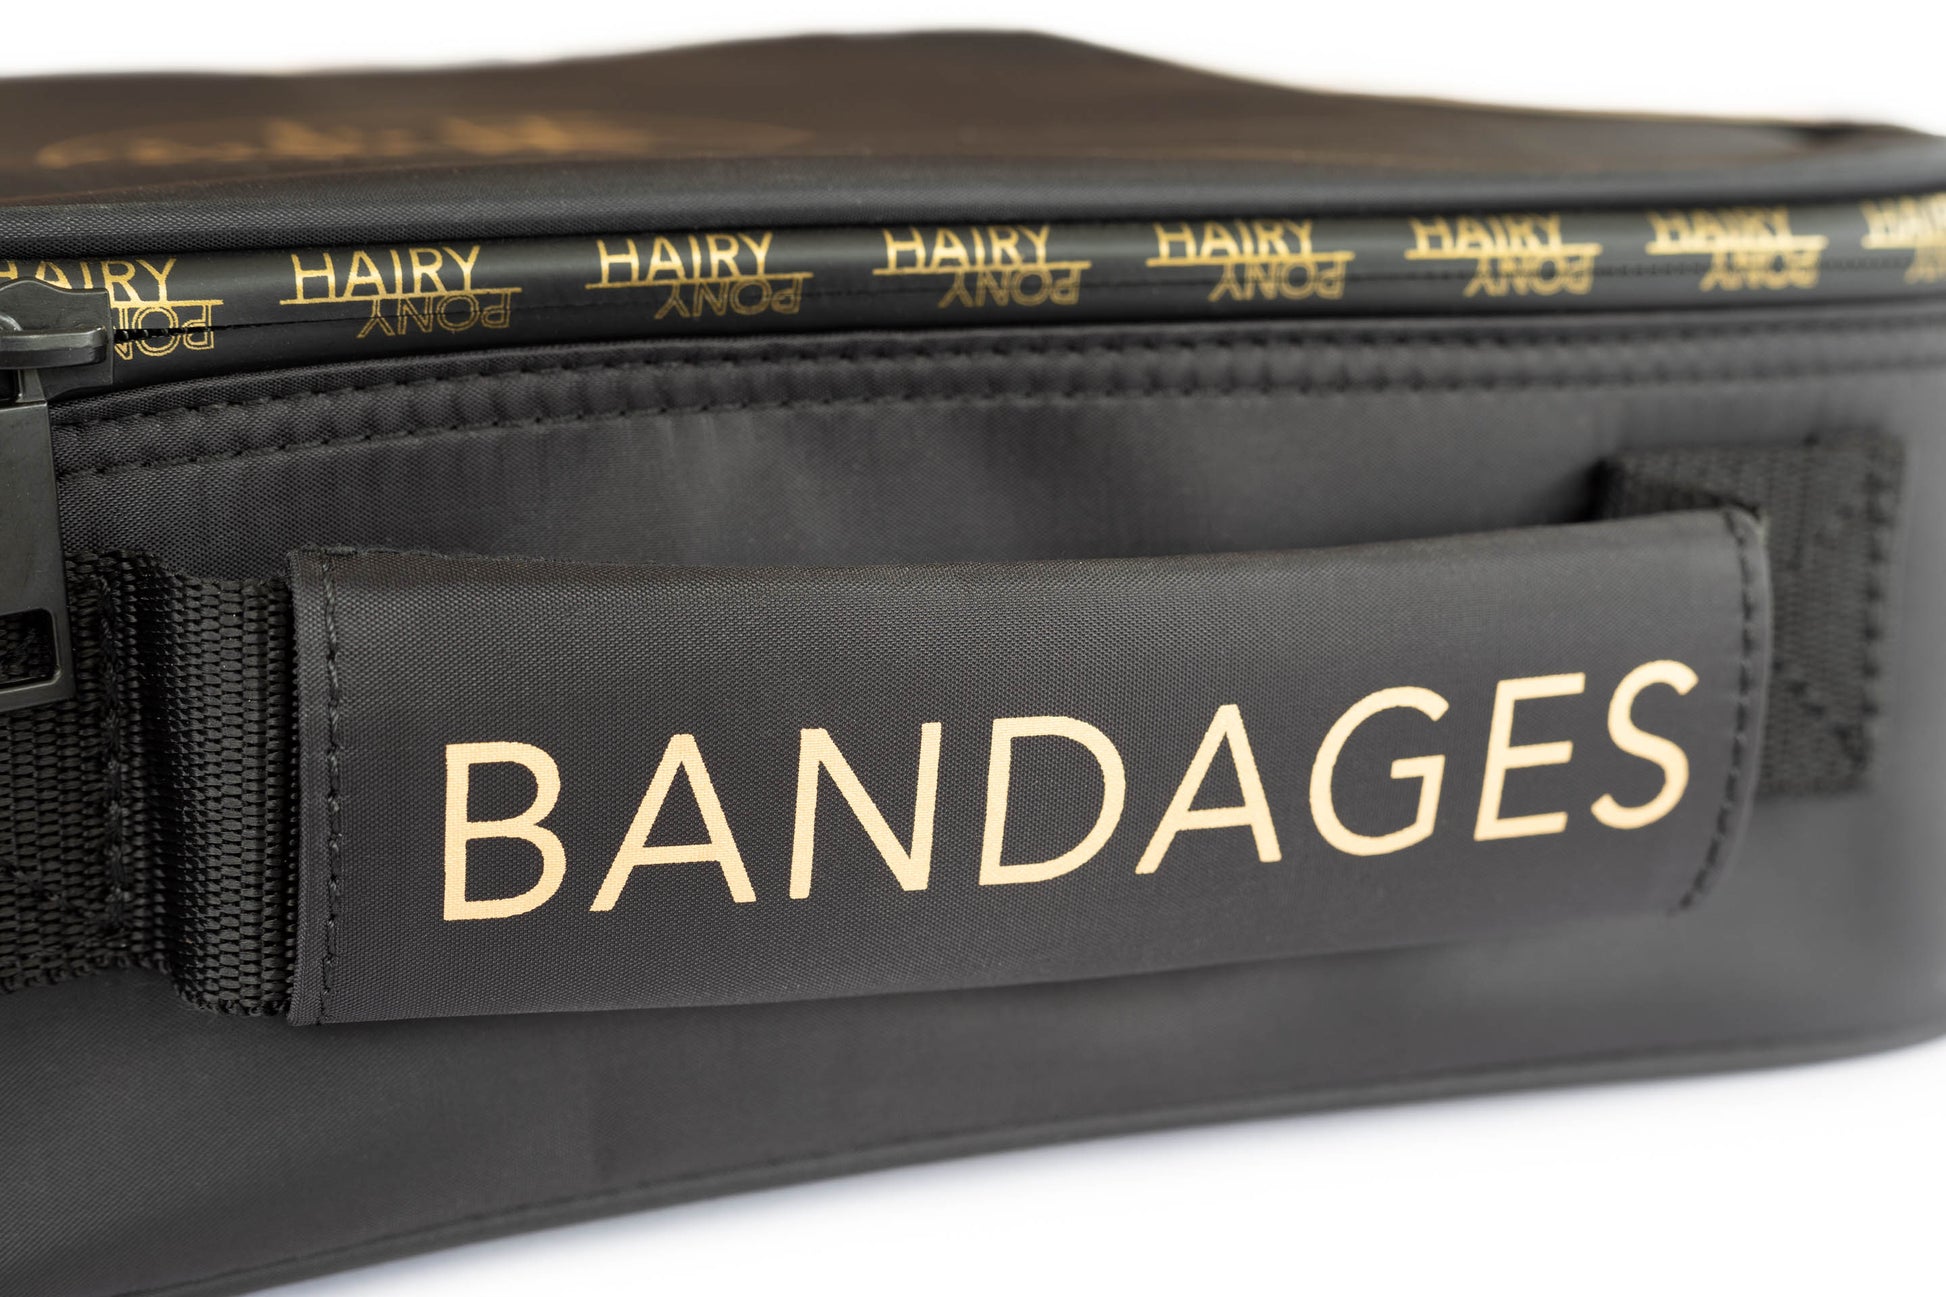 Custom Storage Bag Label on a storage bag that reads "Bandages"